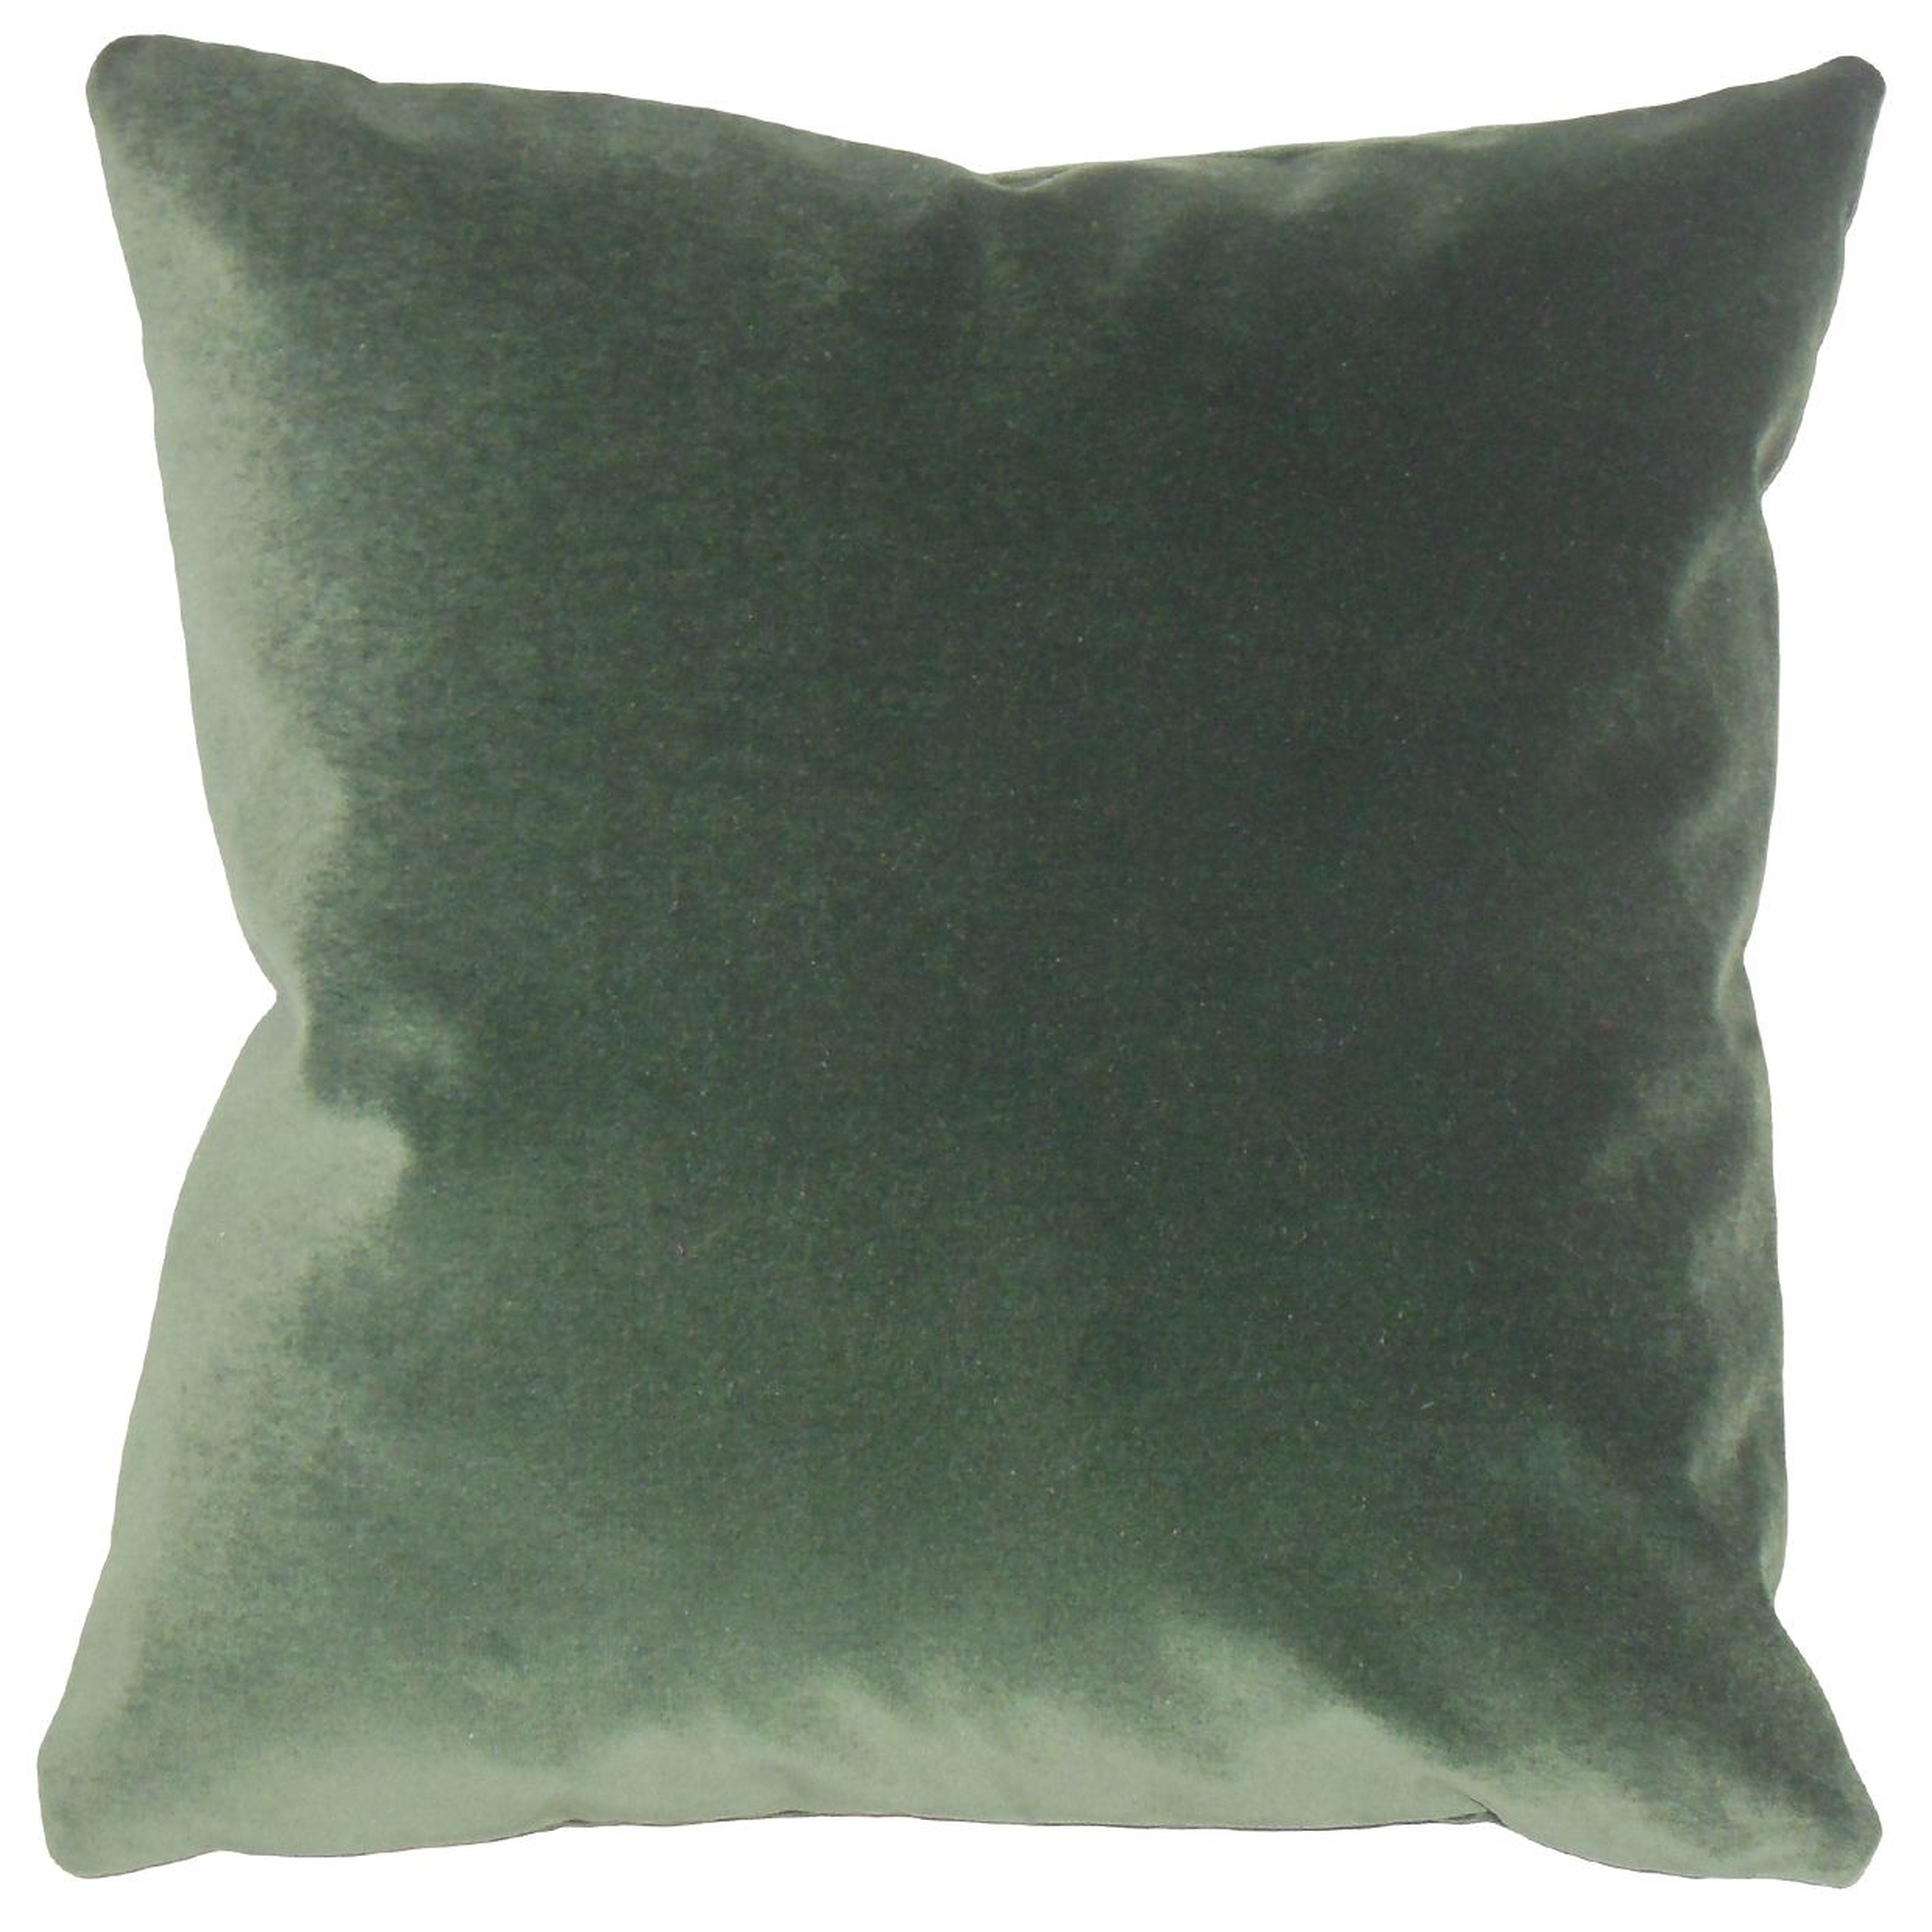 Classic Velvet Pillow, Green, 20" x 20" - Havenly Essentials